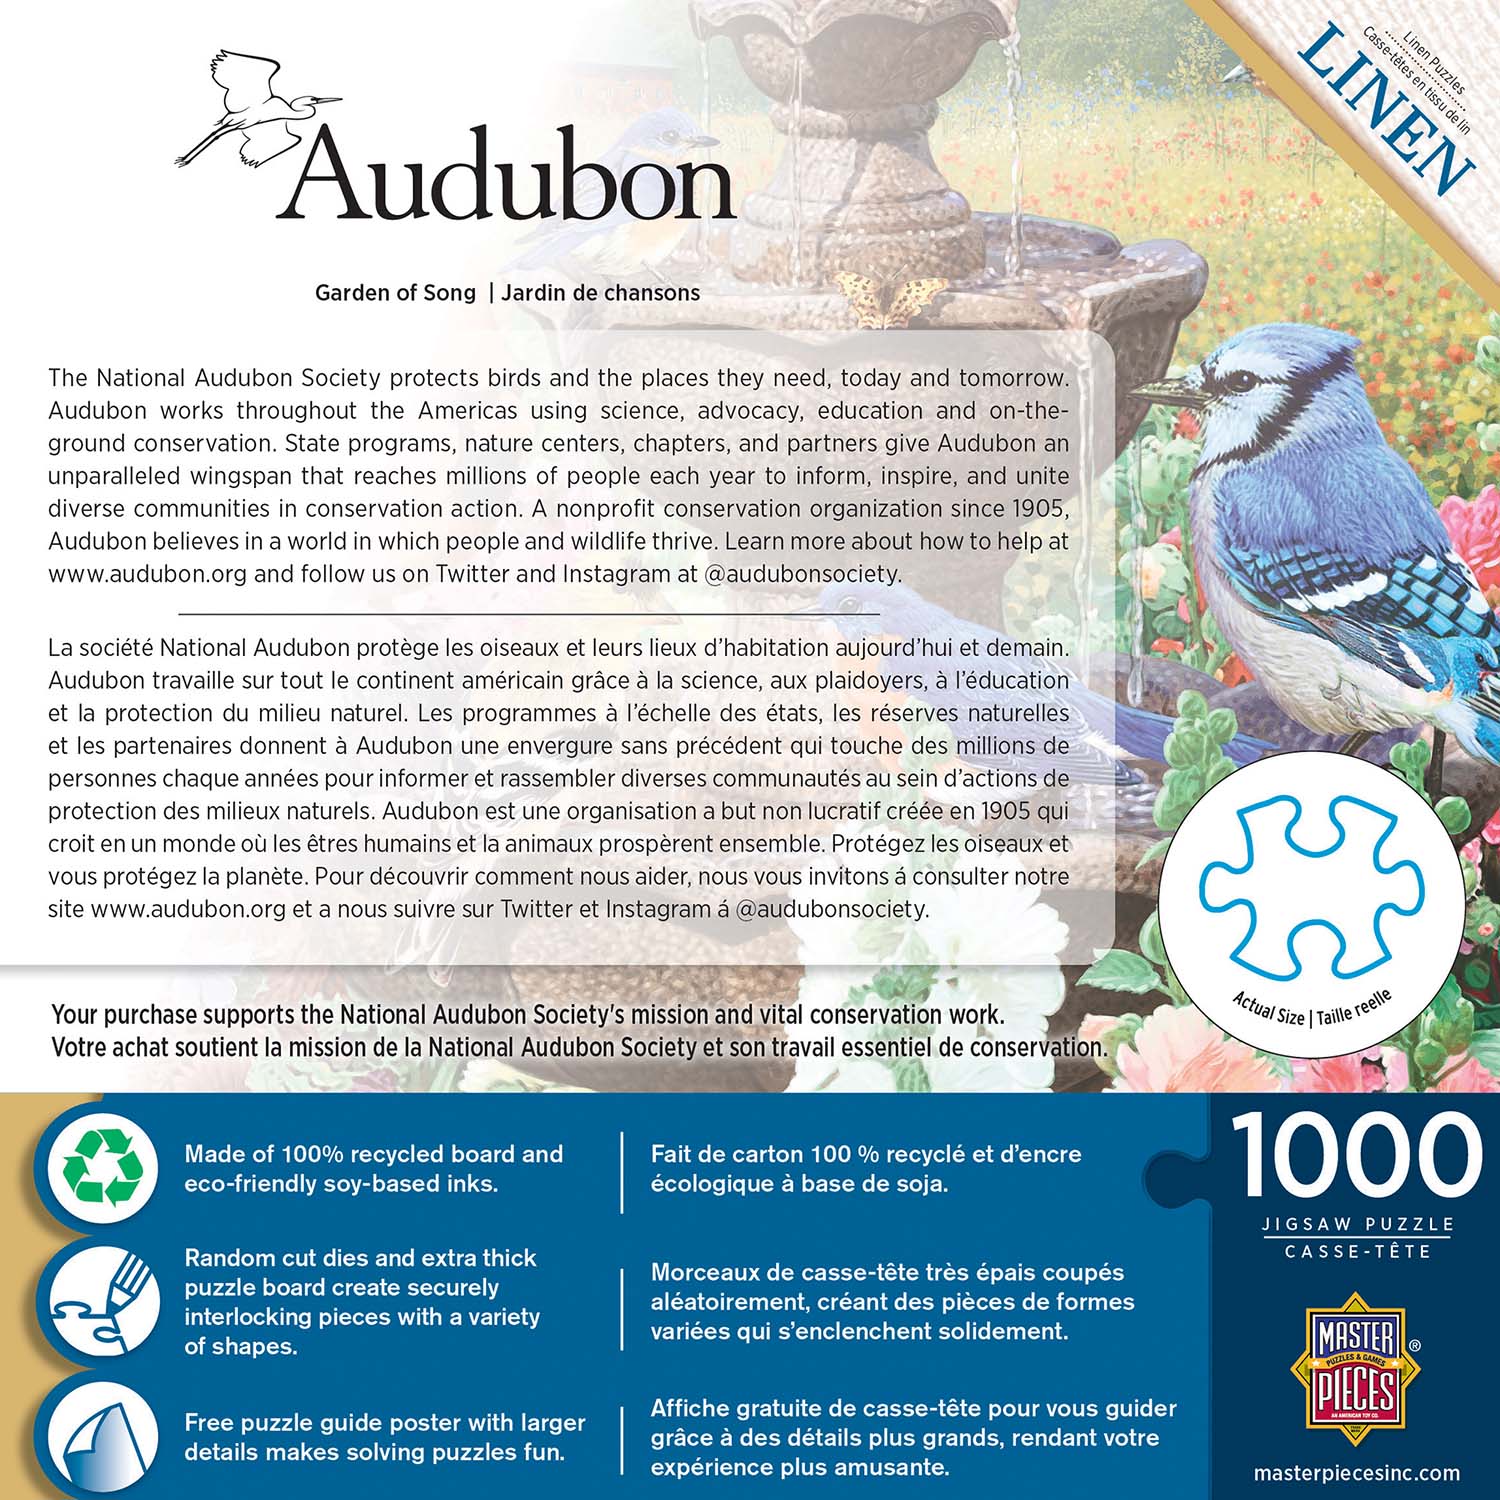 Audubon - Garden of Song